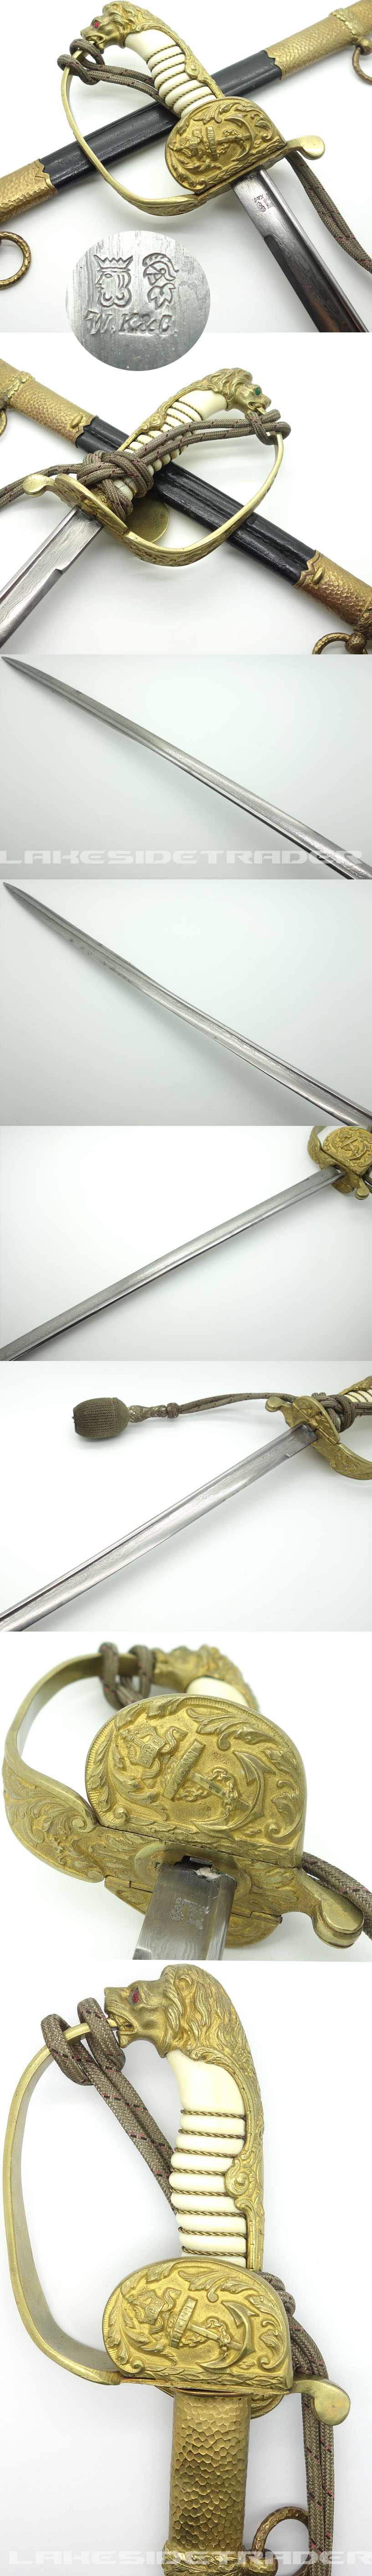 Stunning Imperial Navy Sword w Damascus Blade